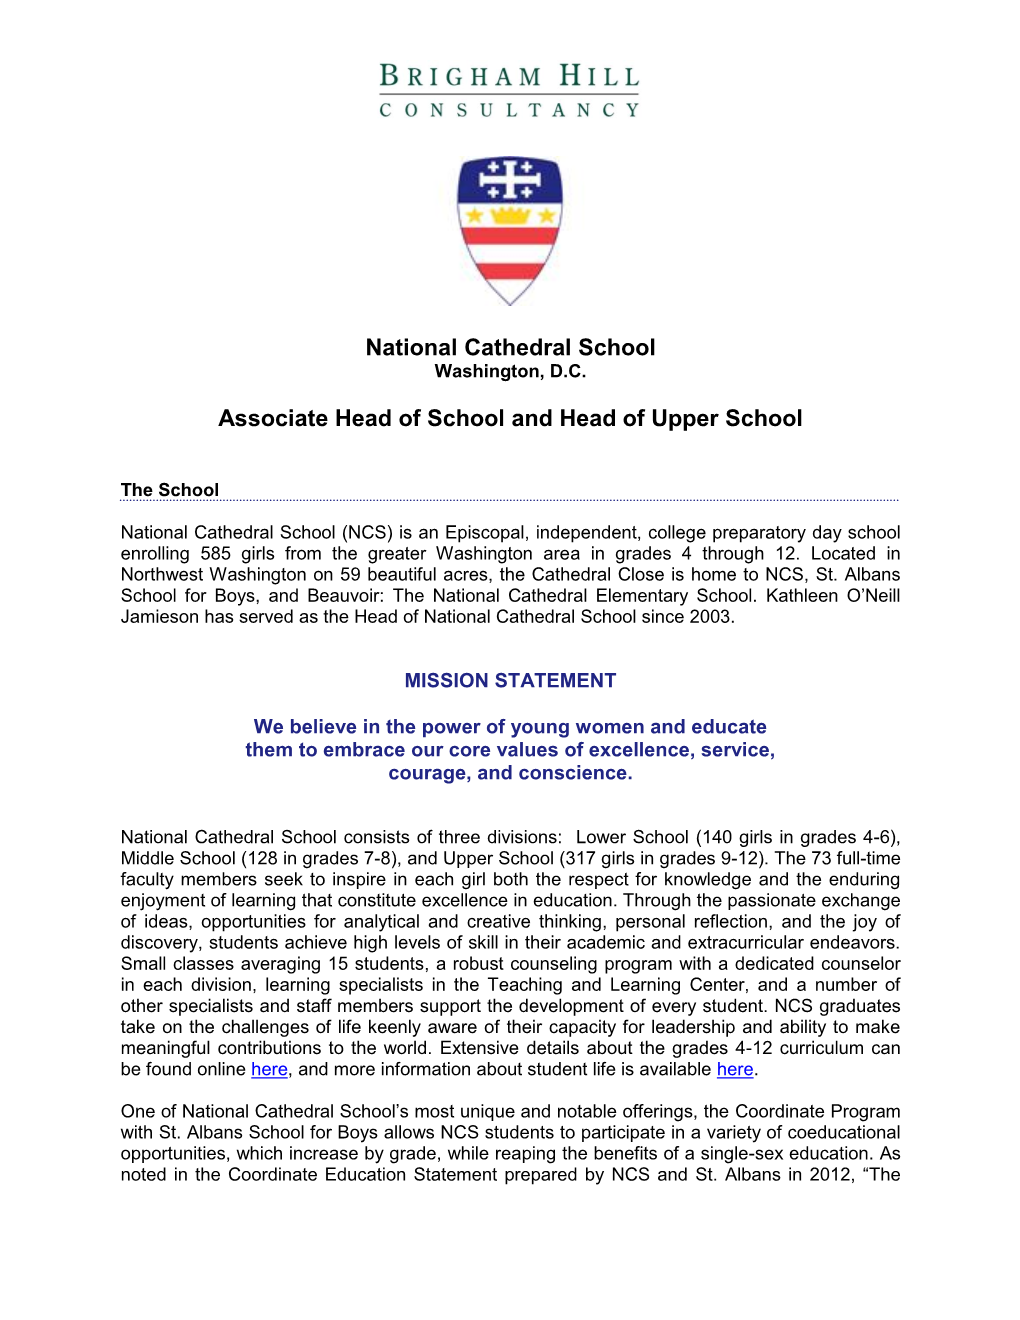 NATIONAL CATHEDRAL SCHOOL Associate Head of School and Head of Upper School